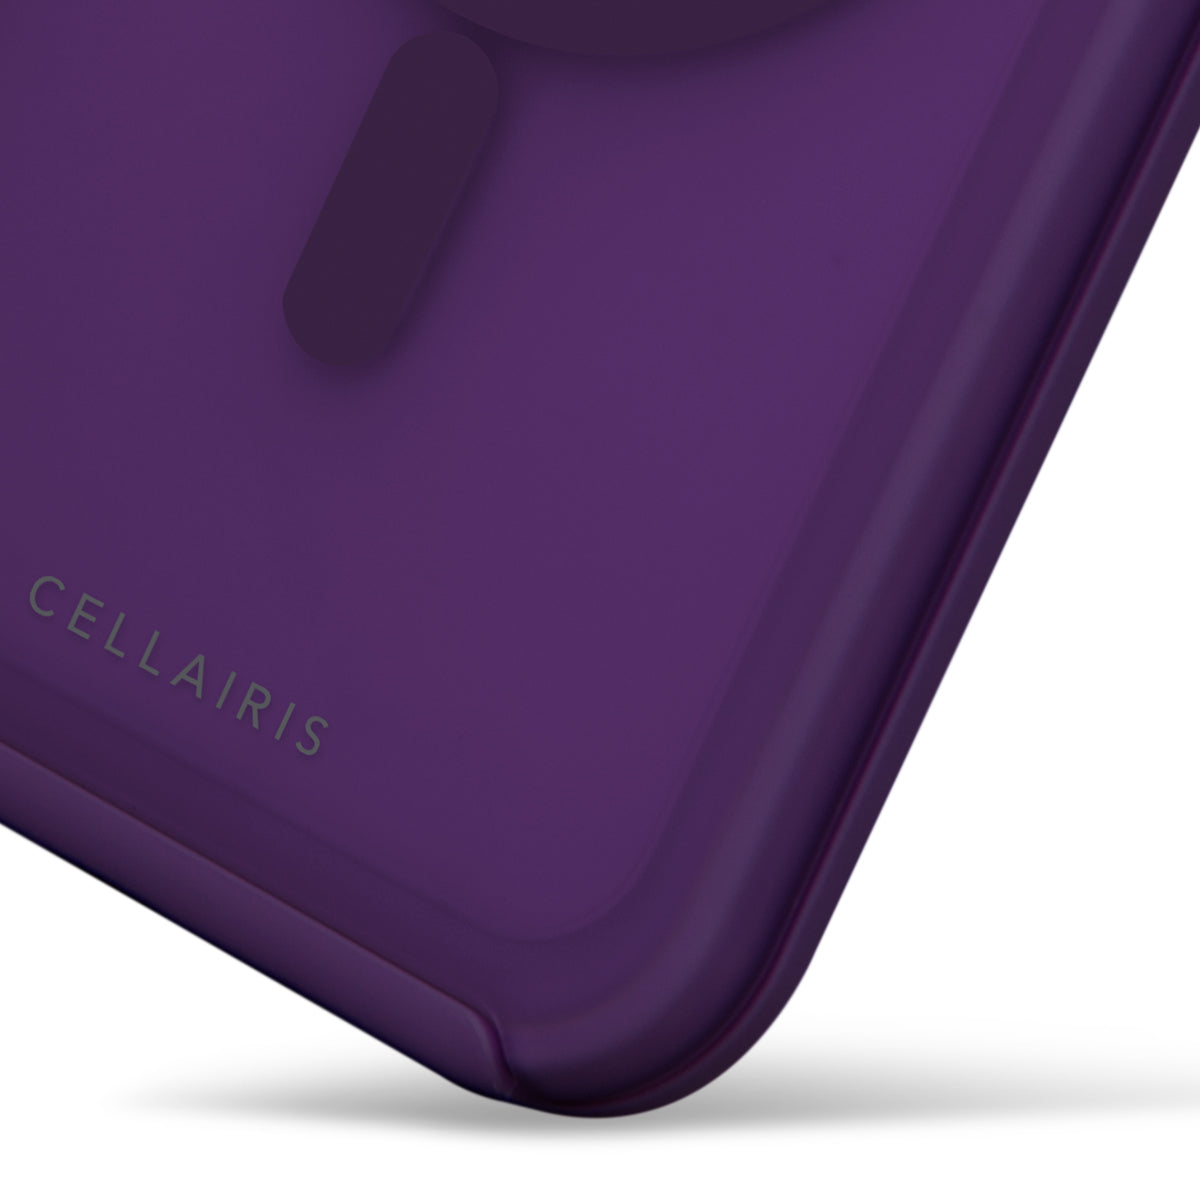 La Hornet Matte - iPhone 15 Pro Max Eggplant w/ MagSafe Cases